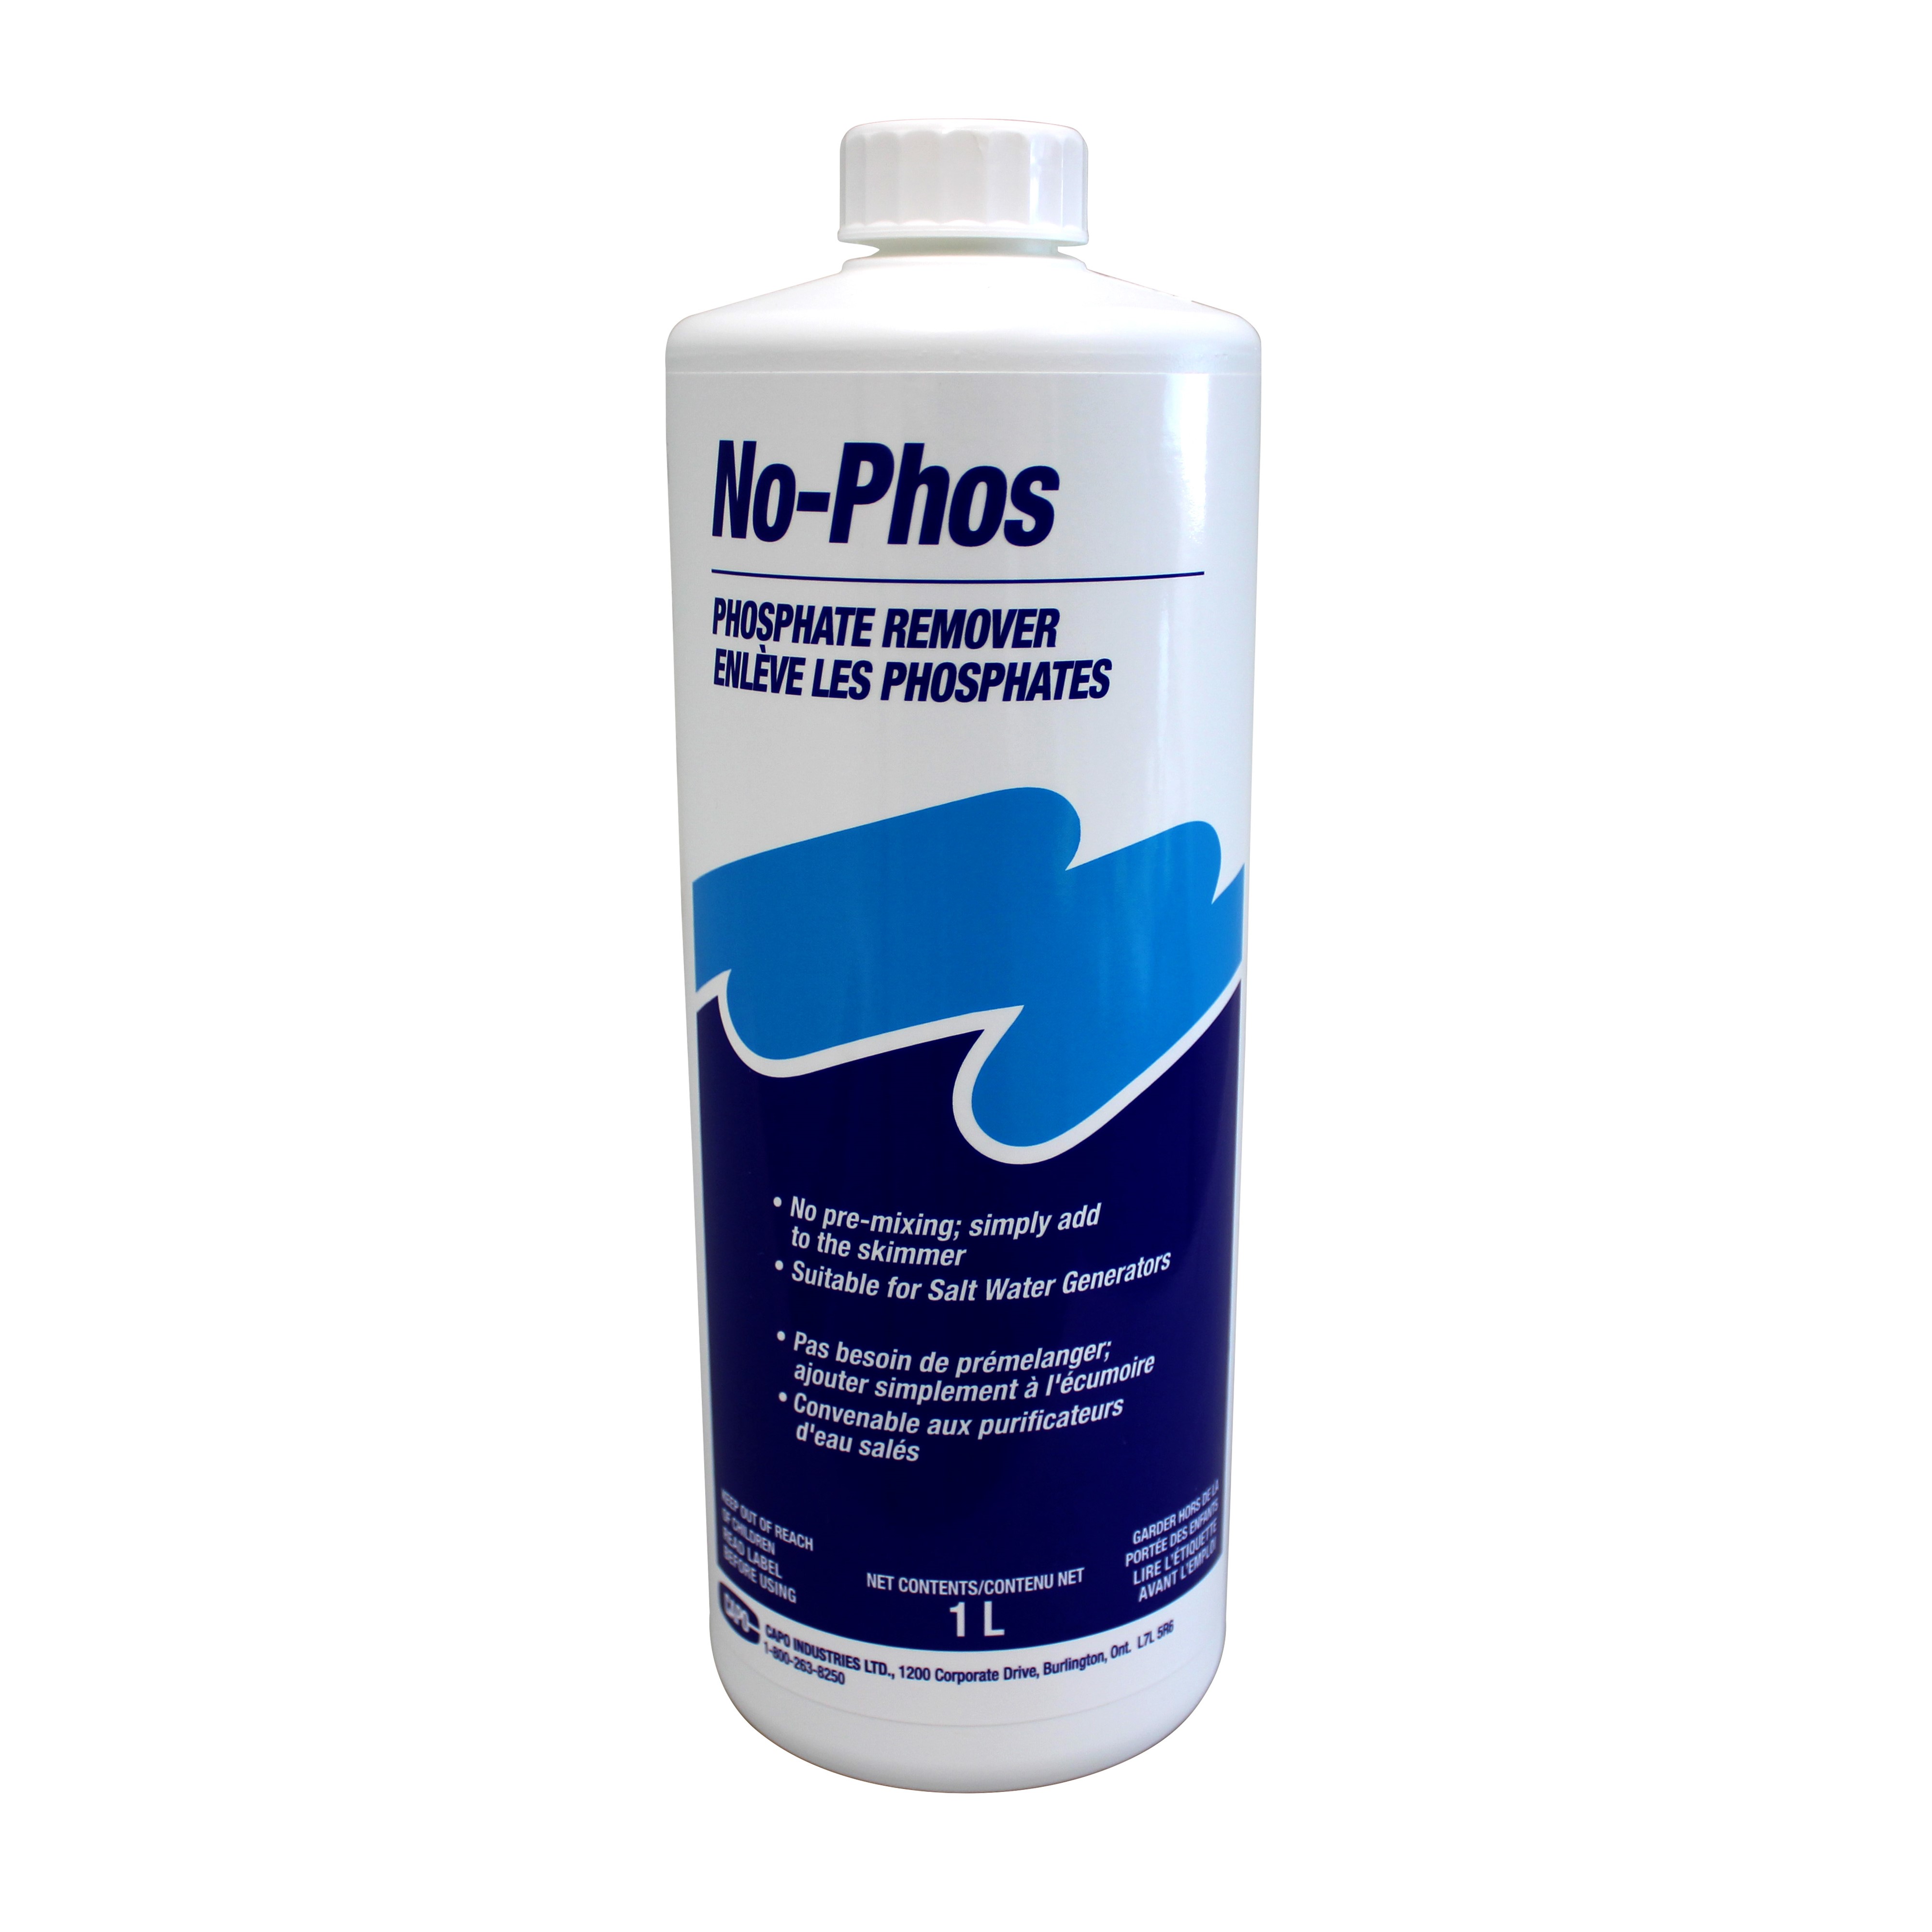 No-Phos Phosphate Remover